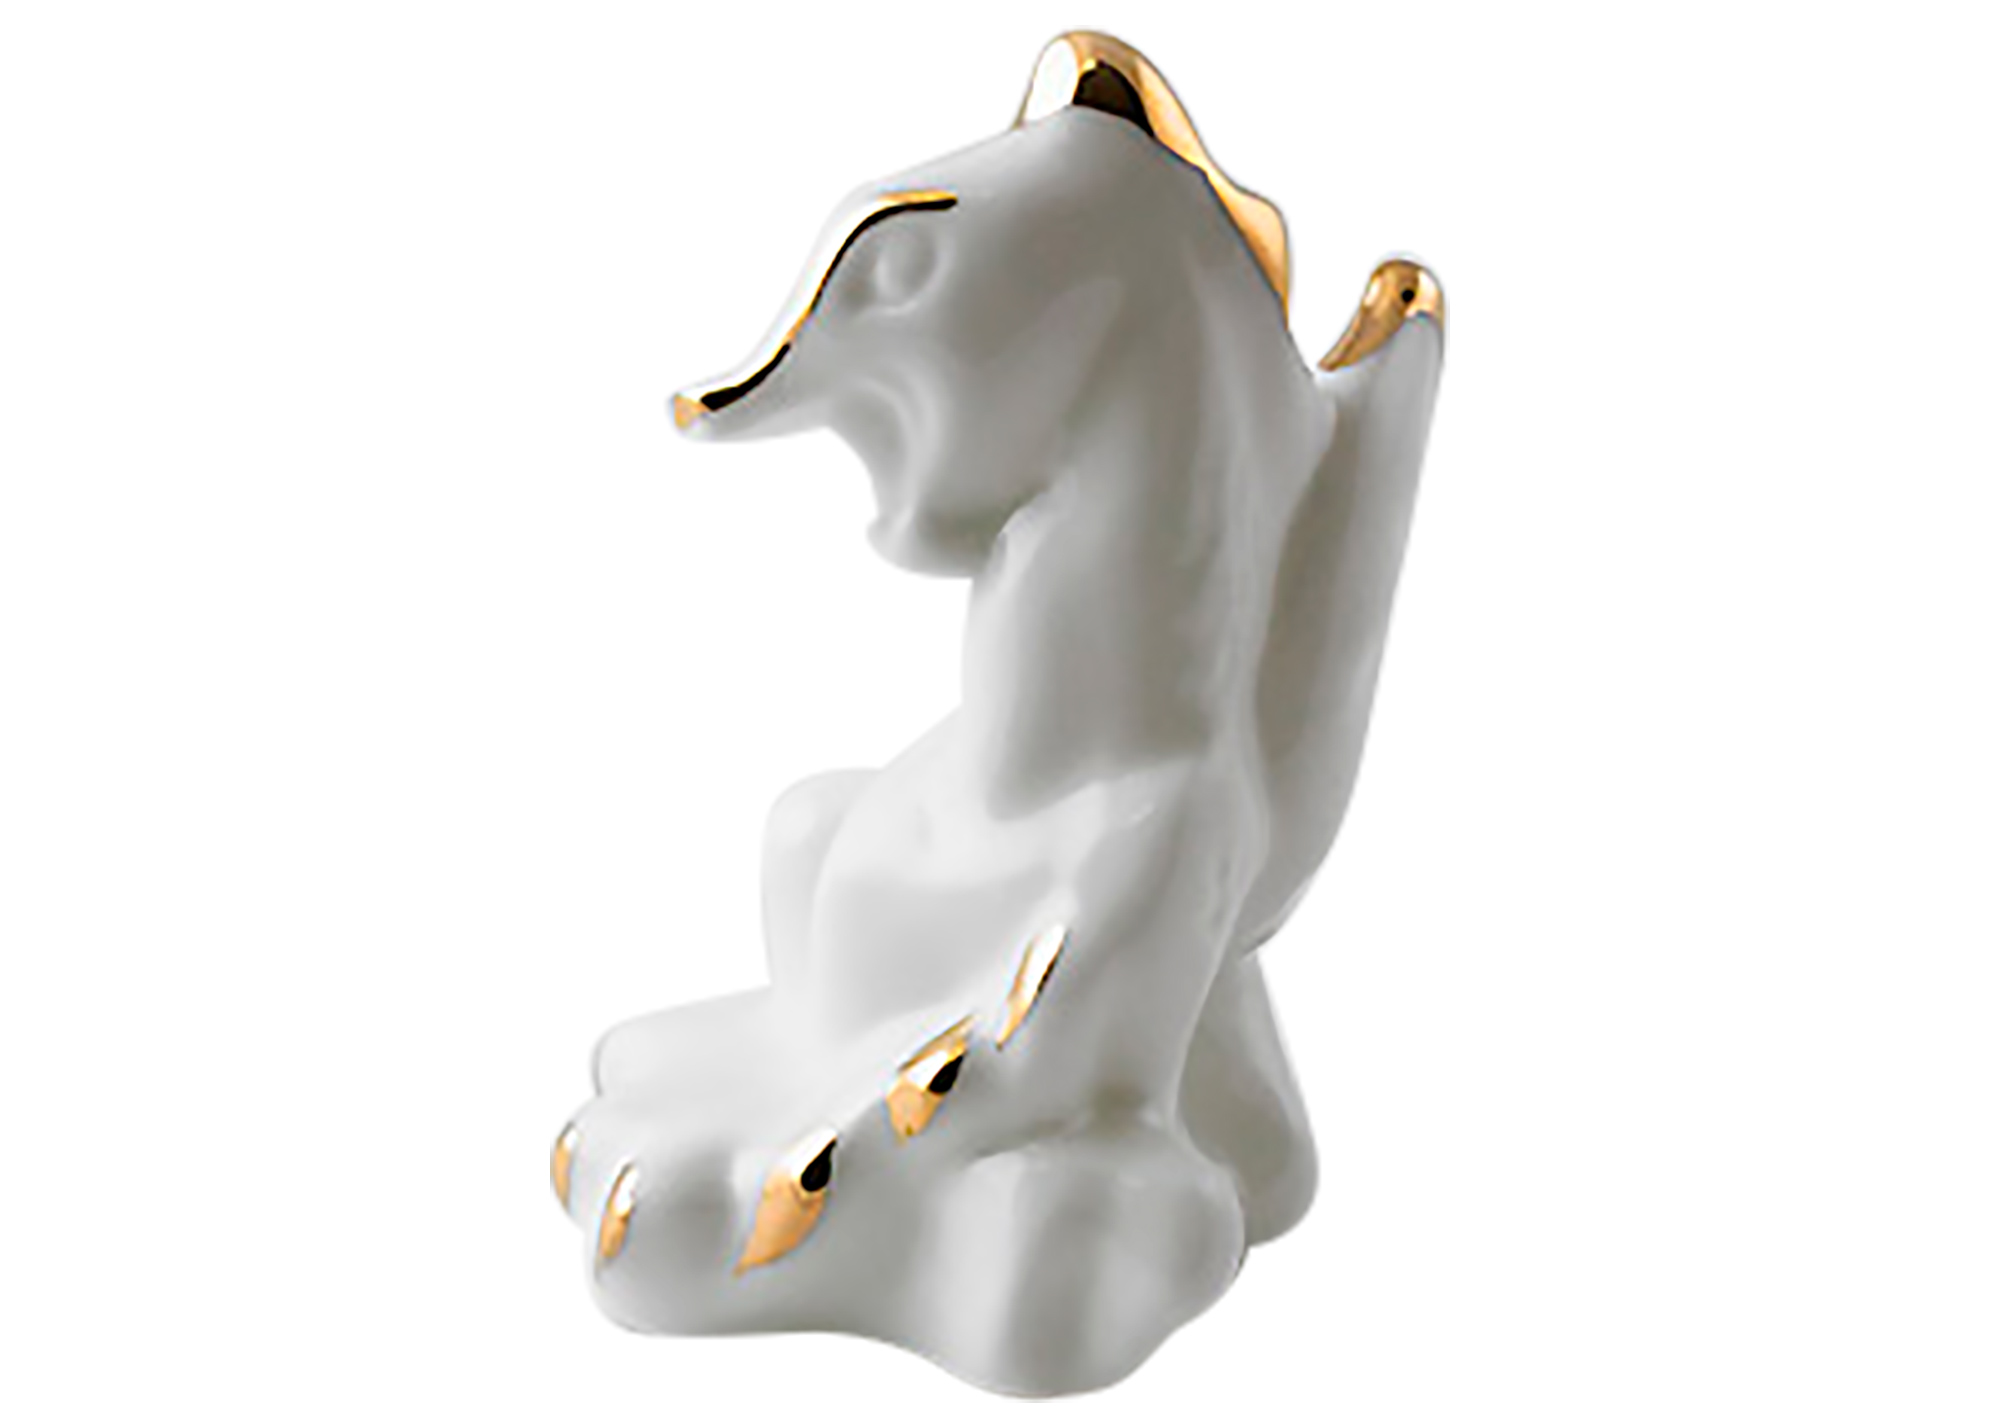 Buy Chinese Zodiac Dragon Gift at GoldenCockerel.com